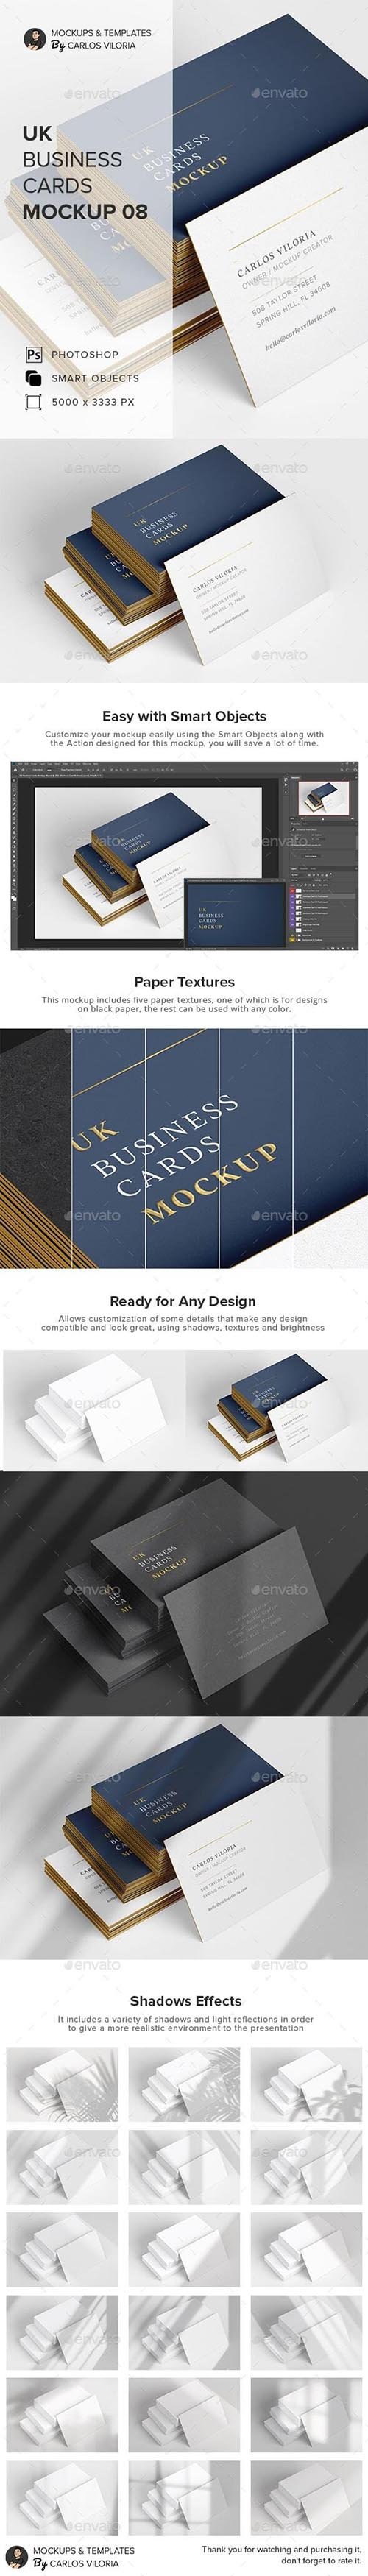 GraphicRiver - UK Business Cards Mockup 08 - 27826313